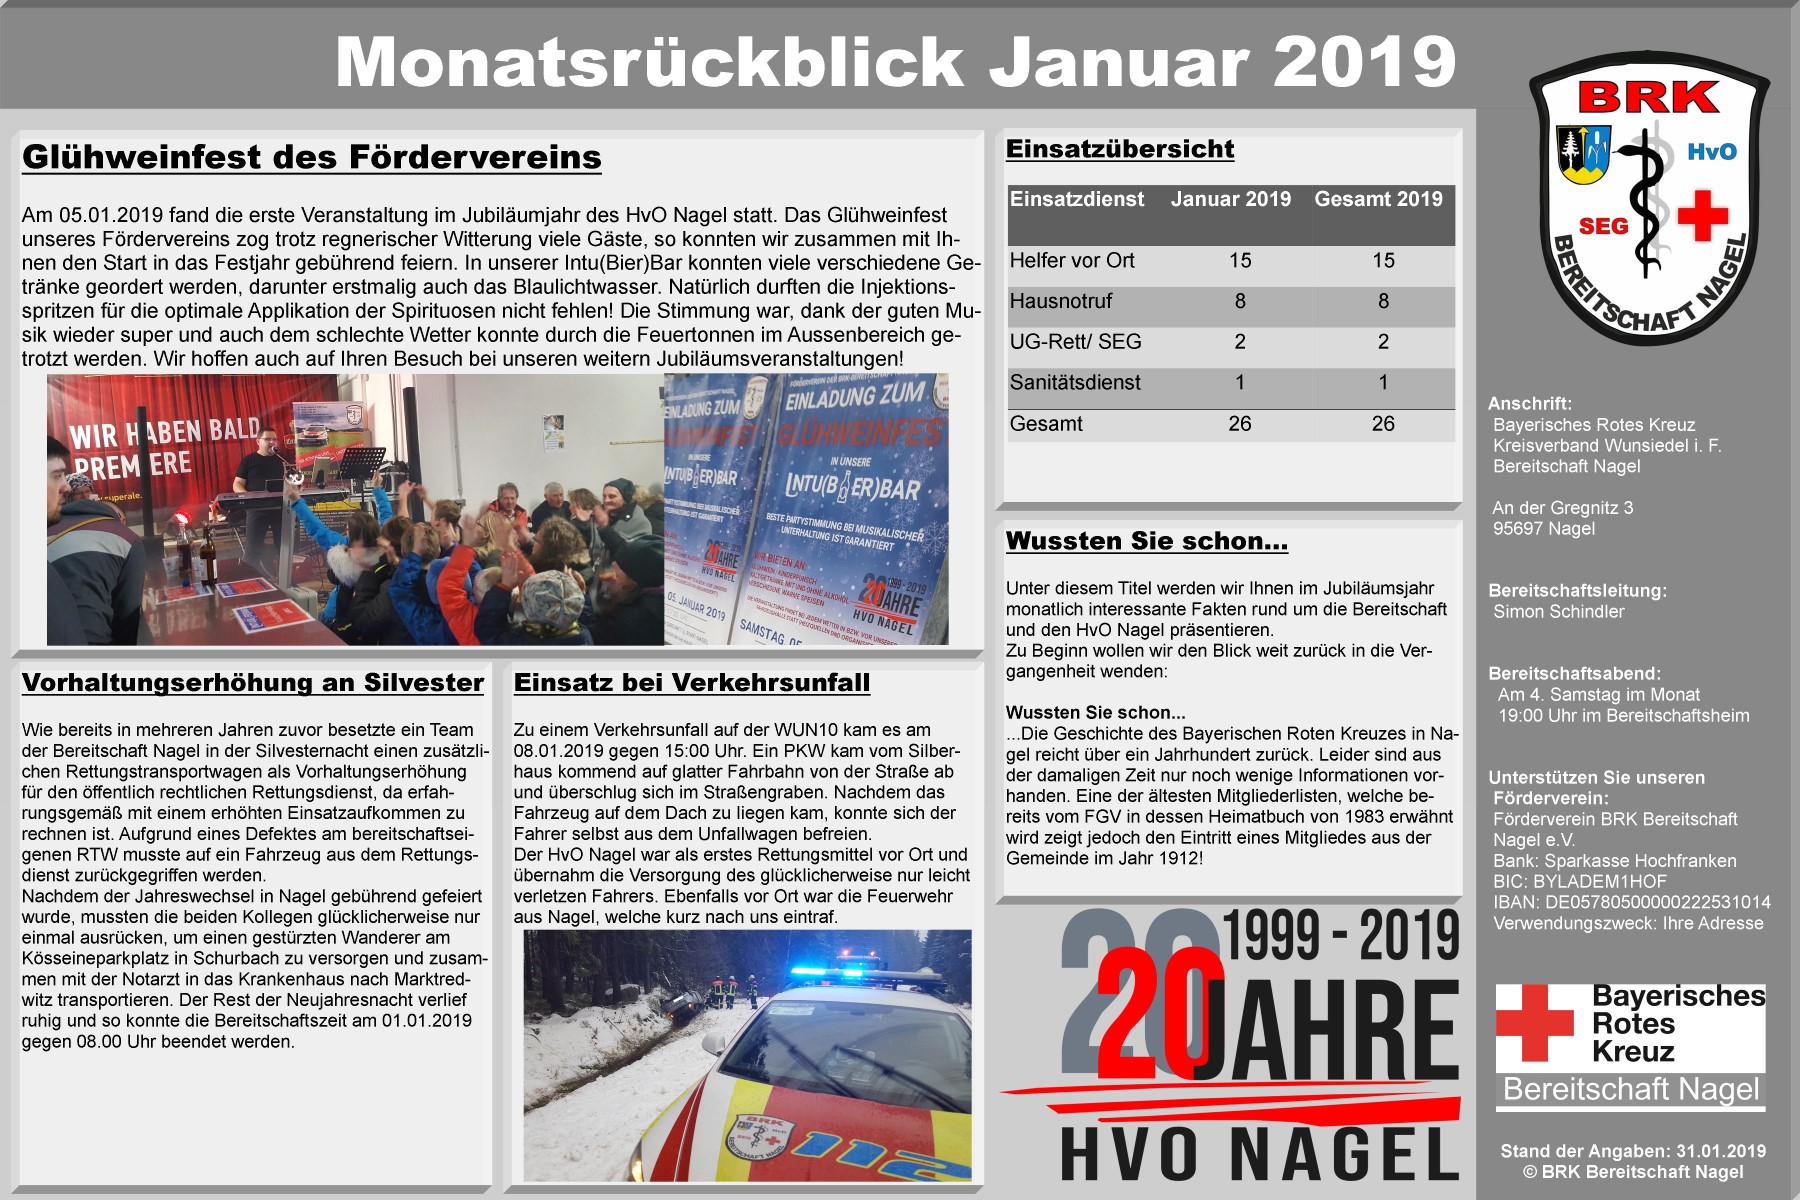 1_-_Plakat_Monatsrckblick_Januar_2019.jpg